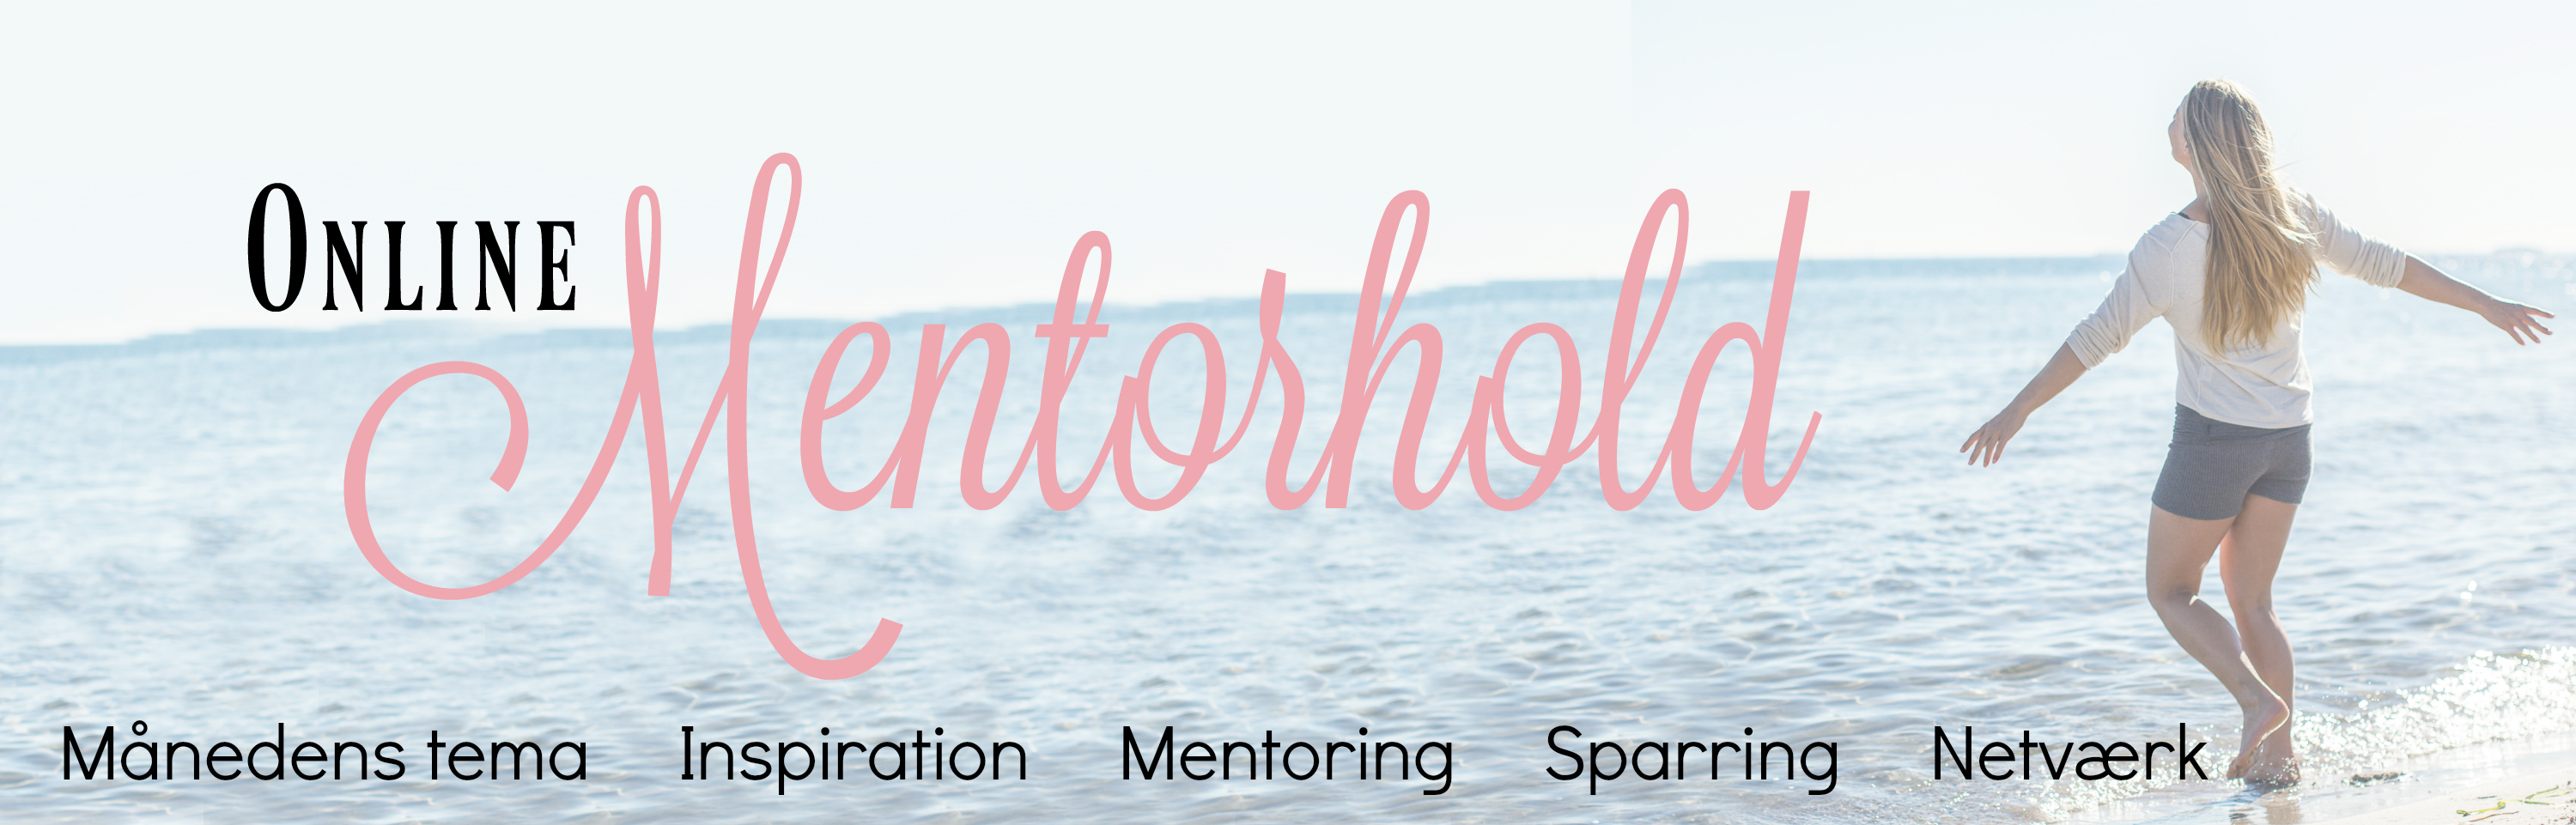 header online mentorhold2